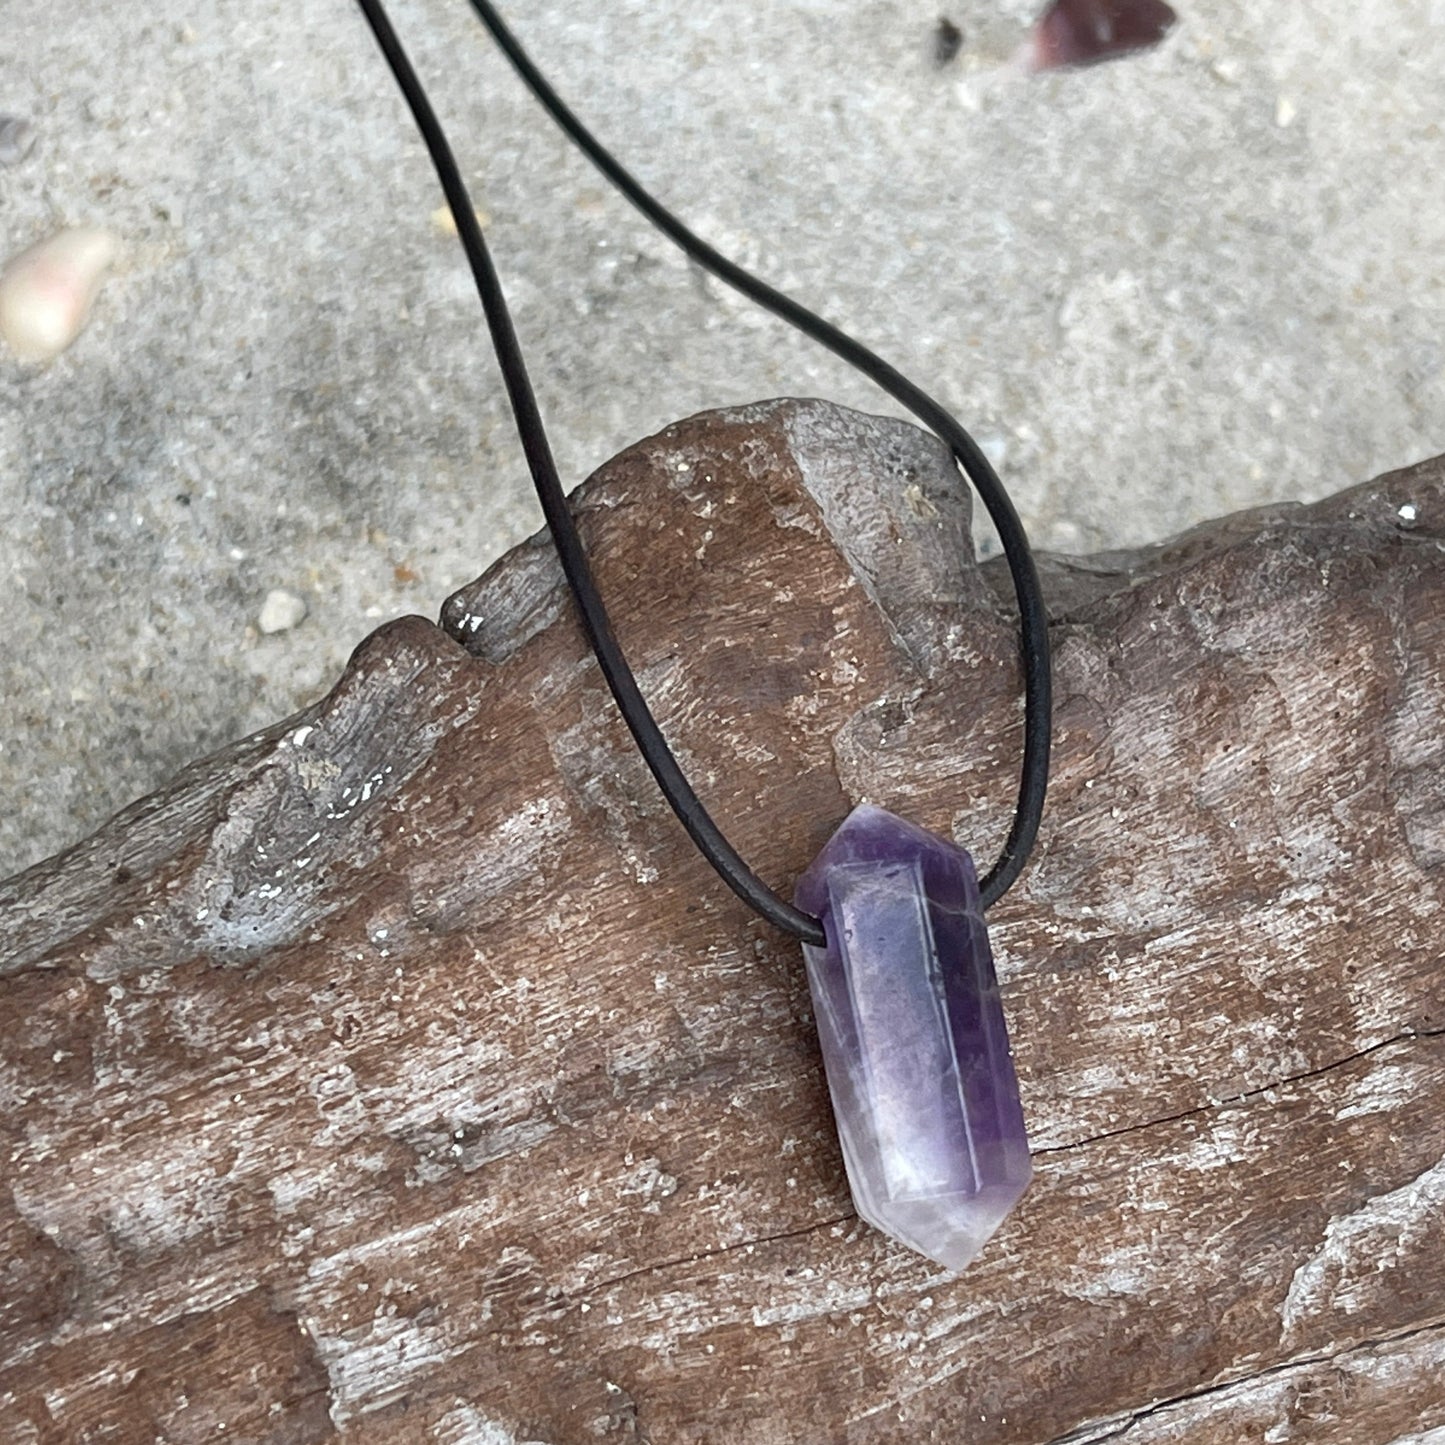 "Stargazer" Purple Amethyst Crystal Leather Necklace